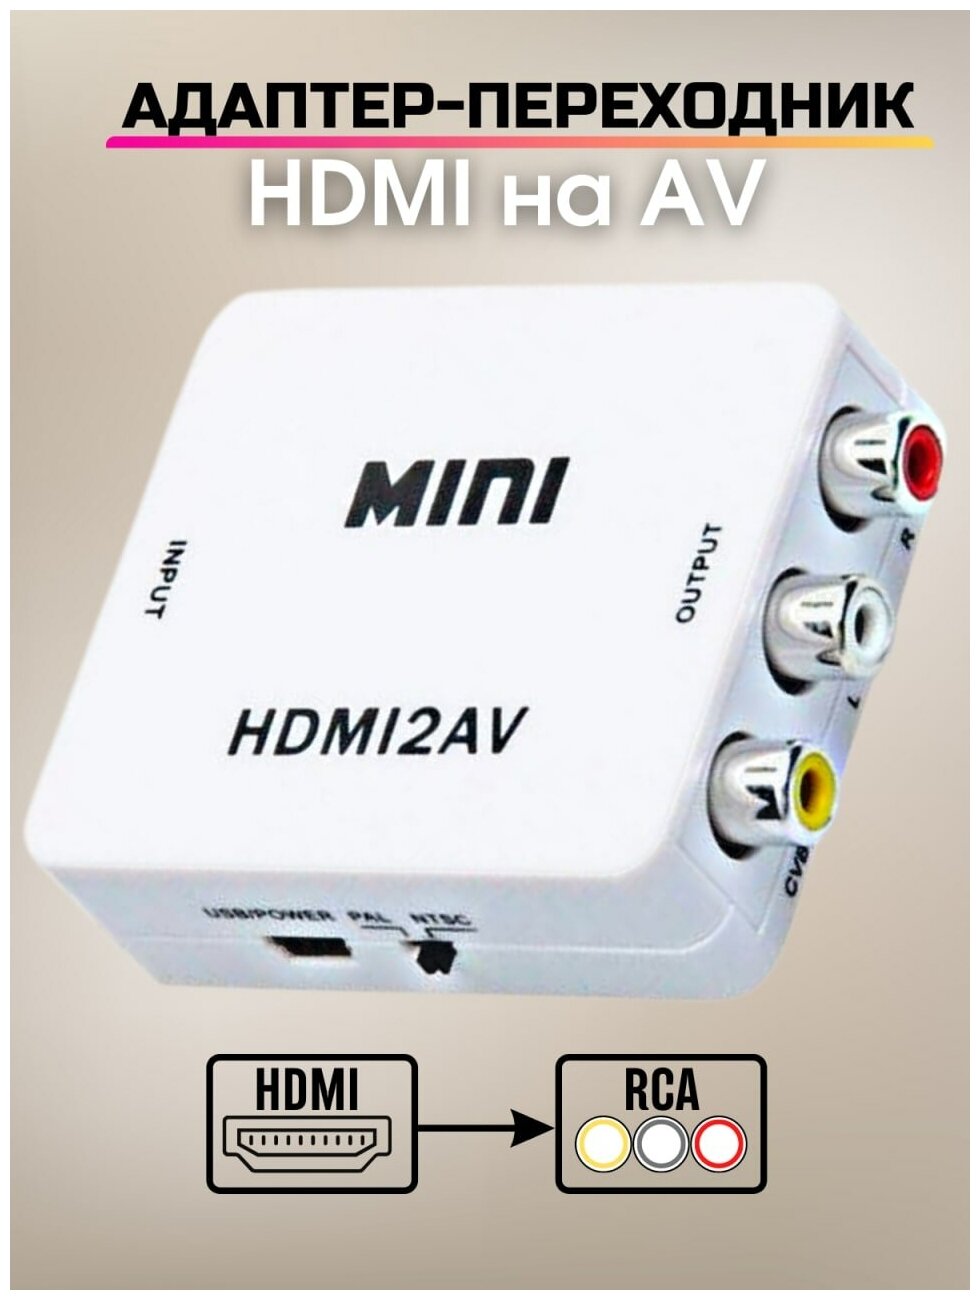 Конвертер HDMI в AV (HDMI2AV) / Переходник HDMI на AV / Hdmi